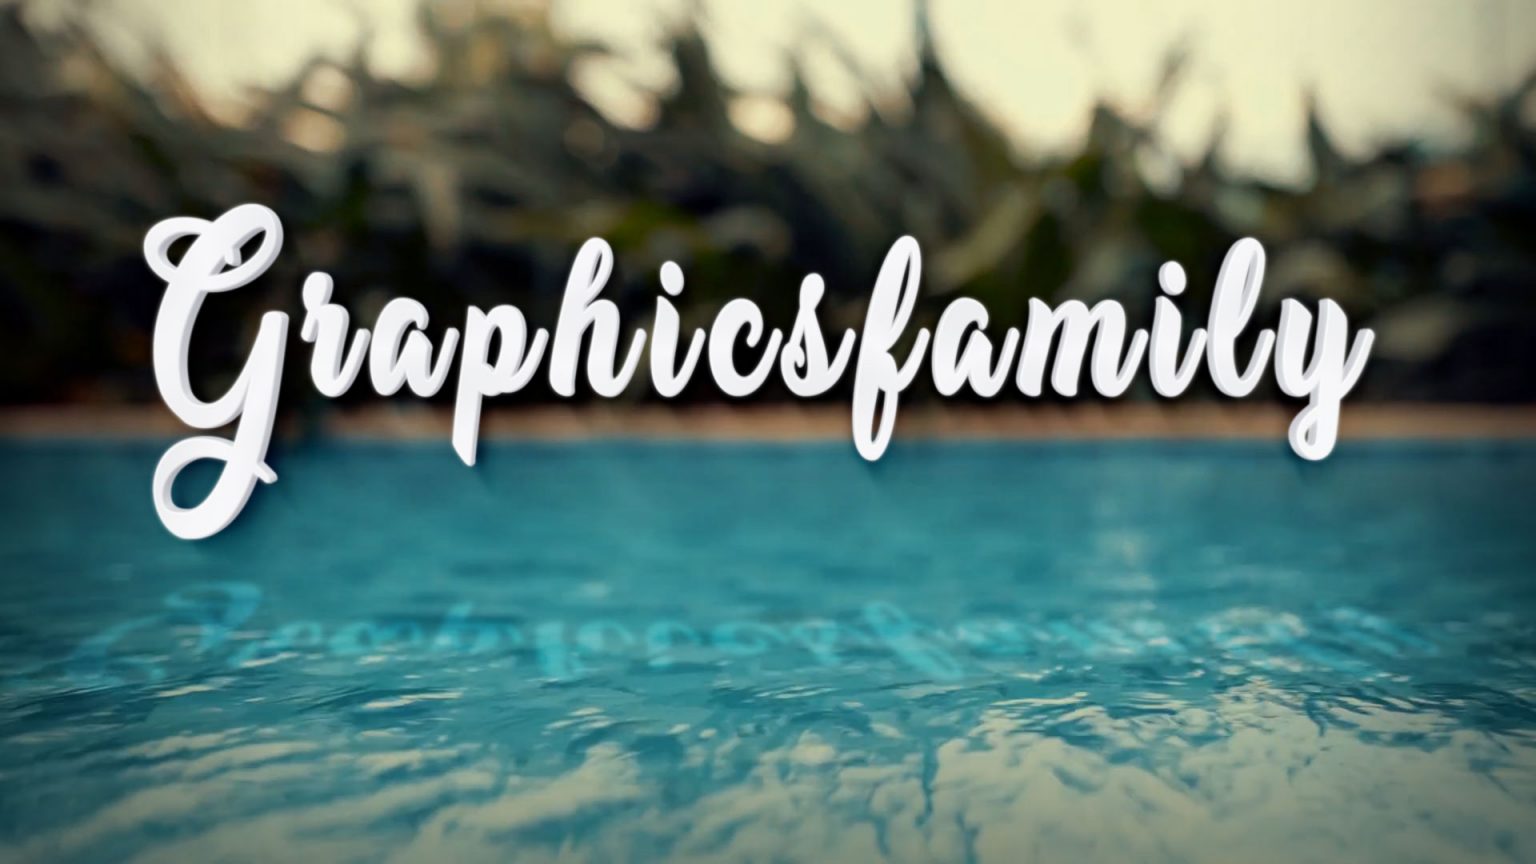 Download Photoshop Logo Animated Mockup - GraphicsFamily